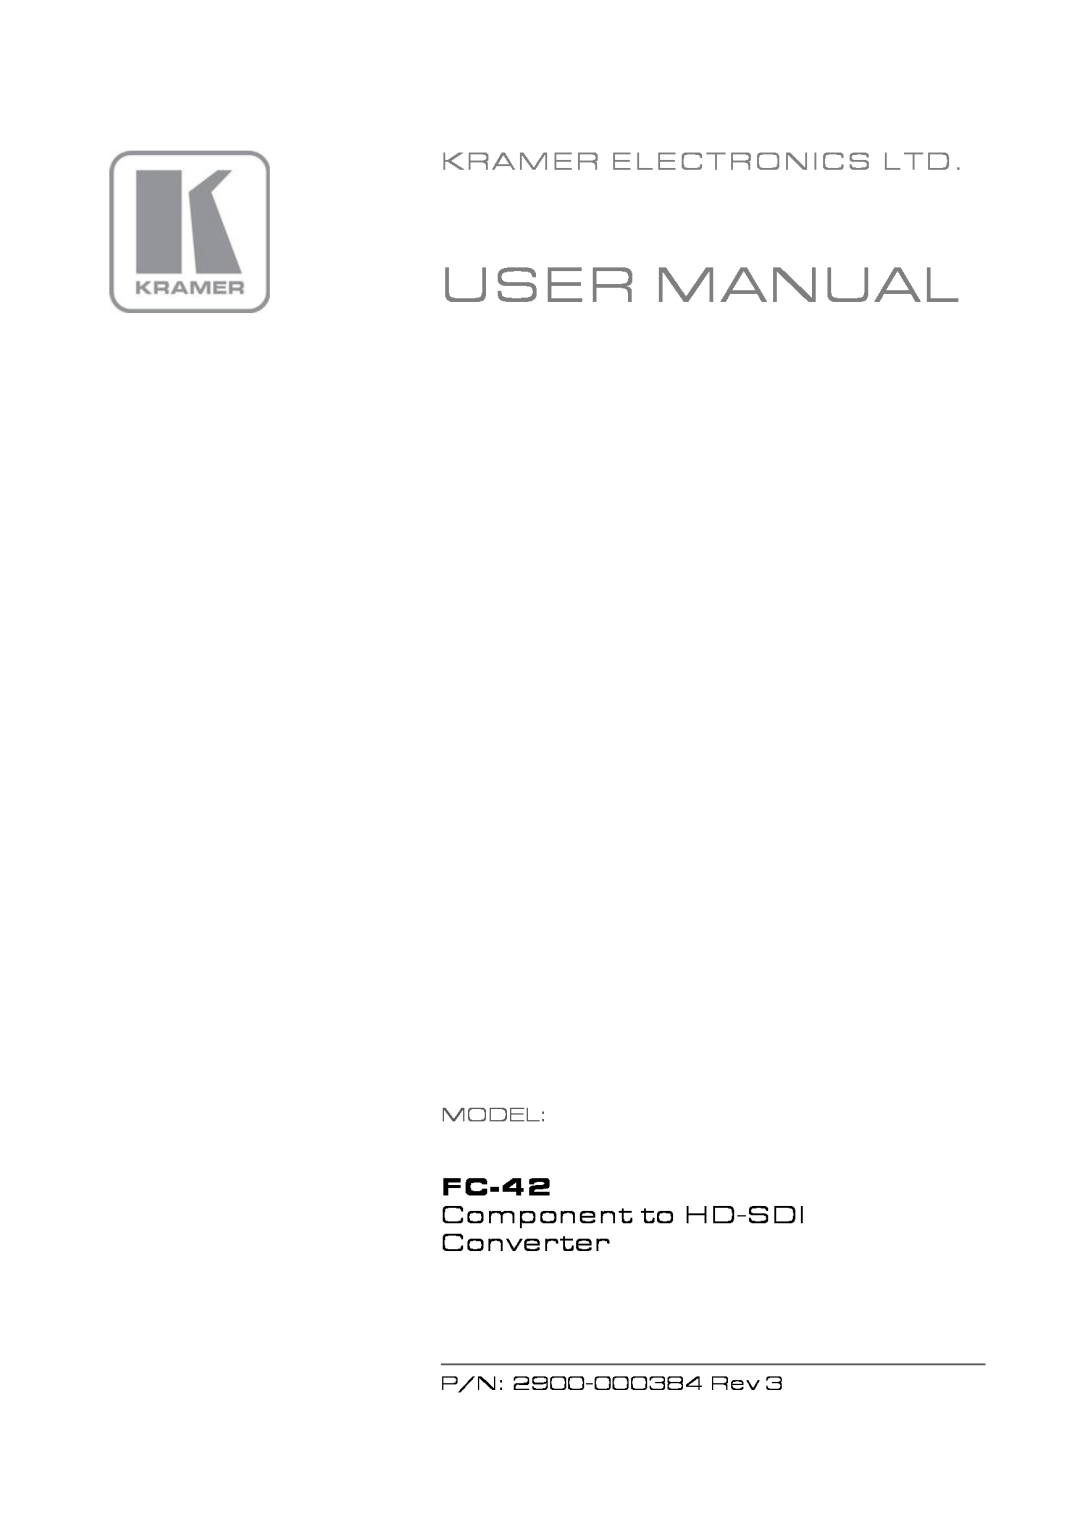 Kramer Electronics fc-42 user manual FC-42, Component to HD-SDI Converter, Model 